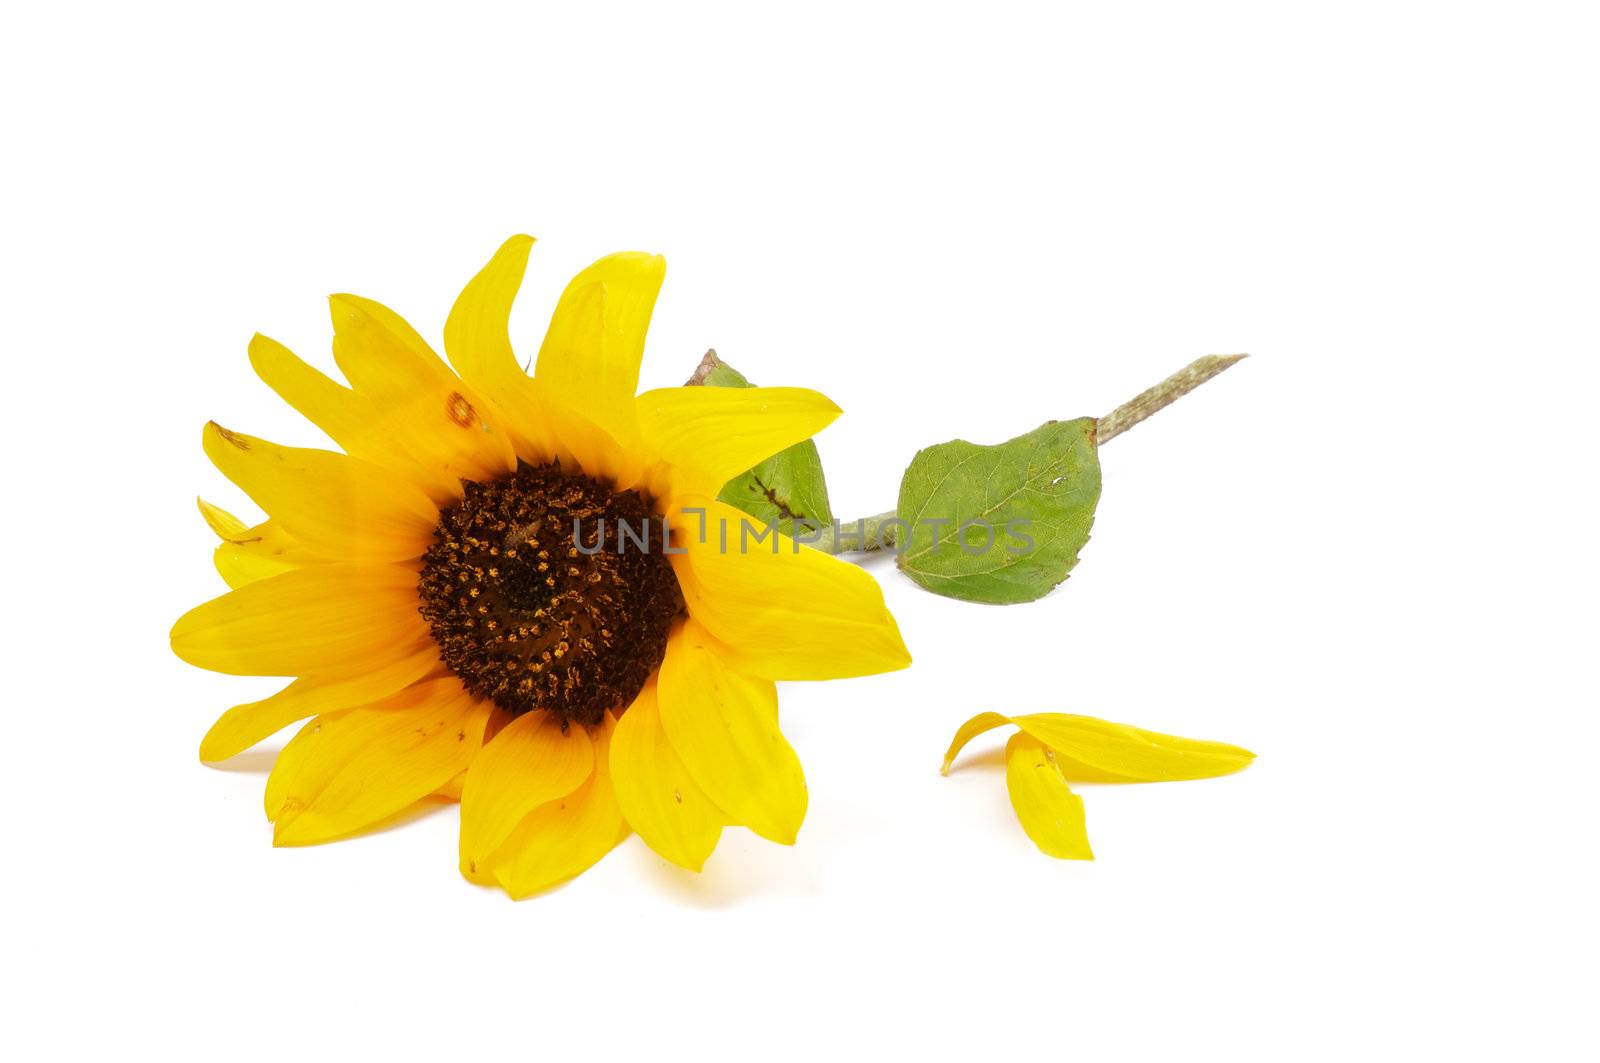 Sunflower and Petals by zhekos